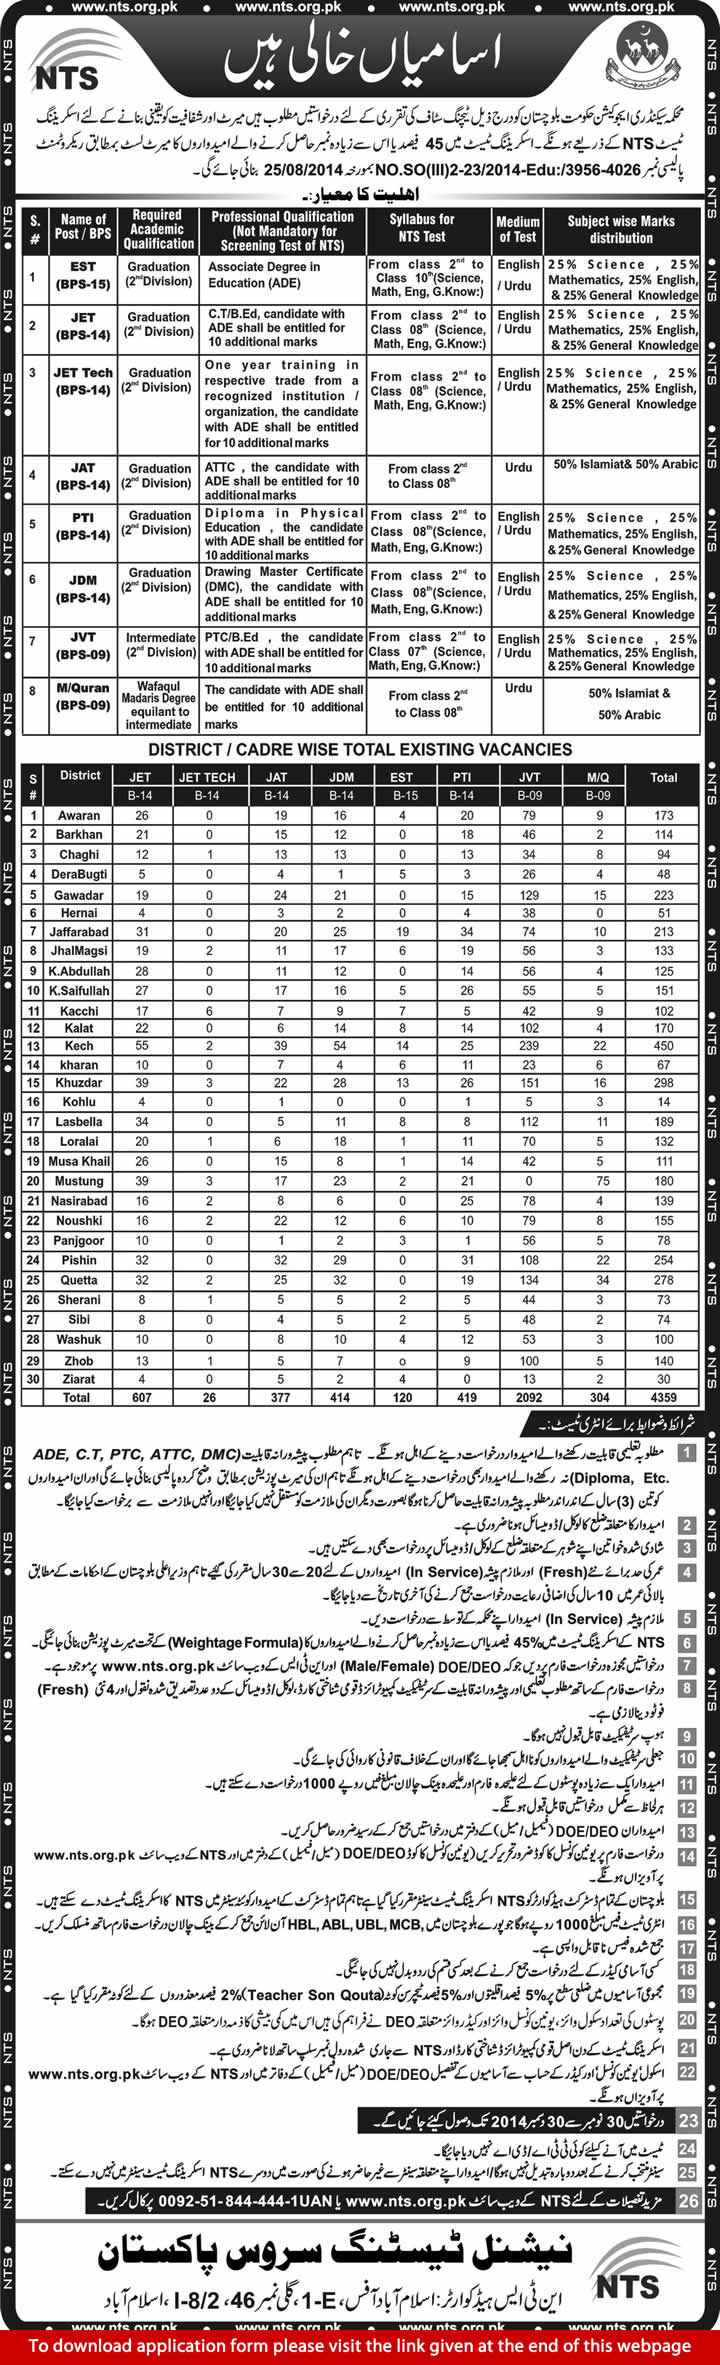 Secondary Education Department Balochistan Jobs 2014 November NTS Application Form Teachers Latest / New